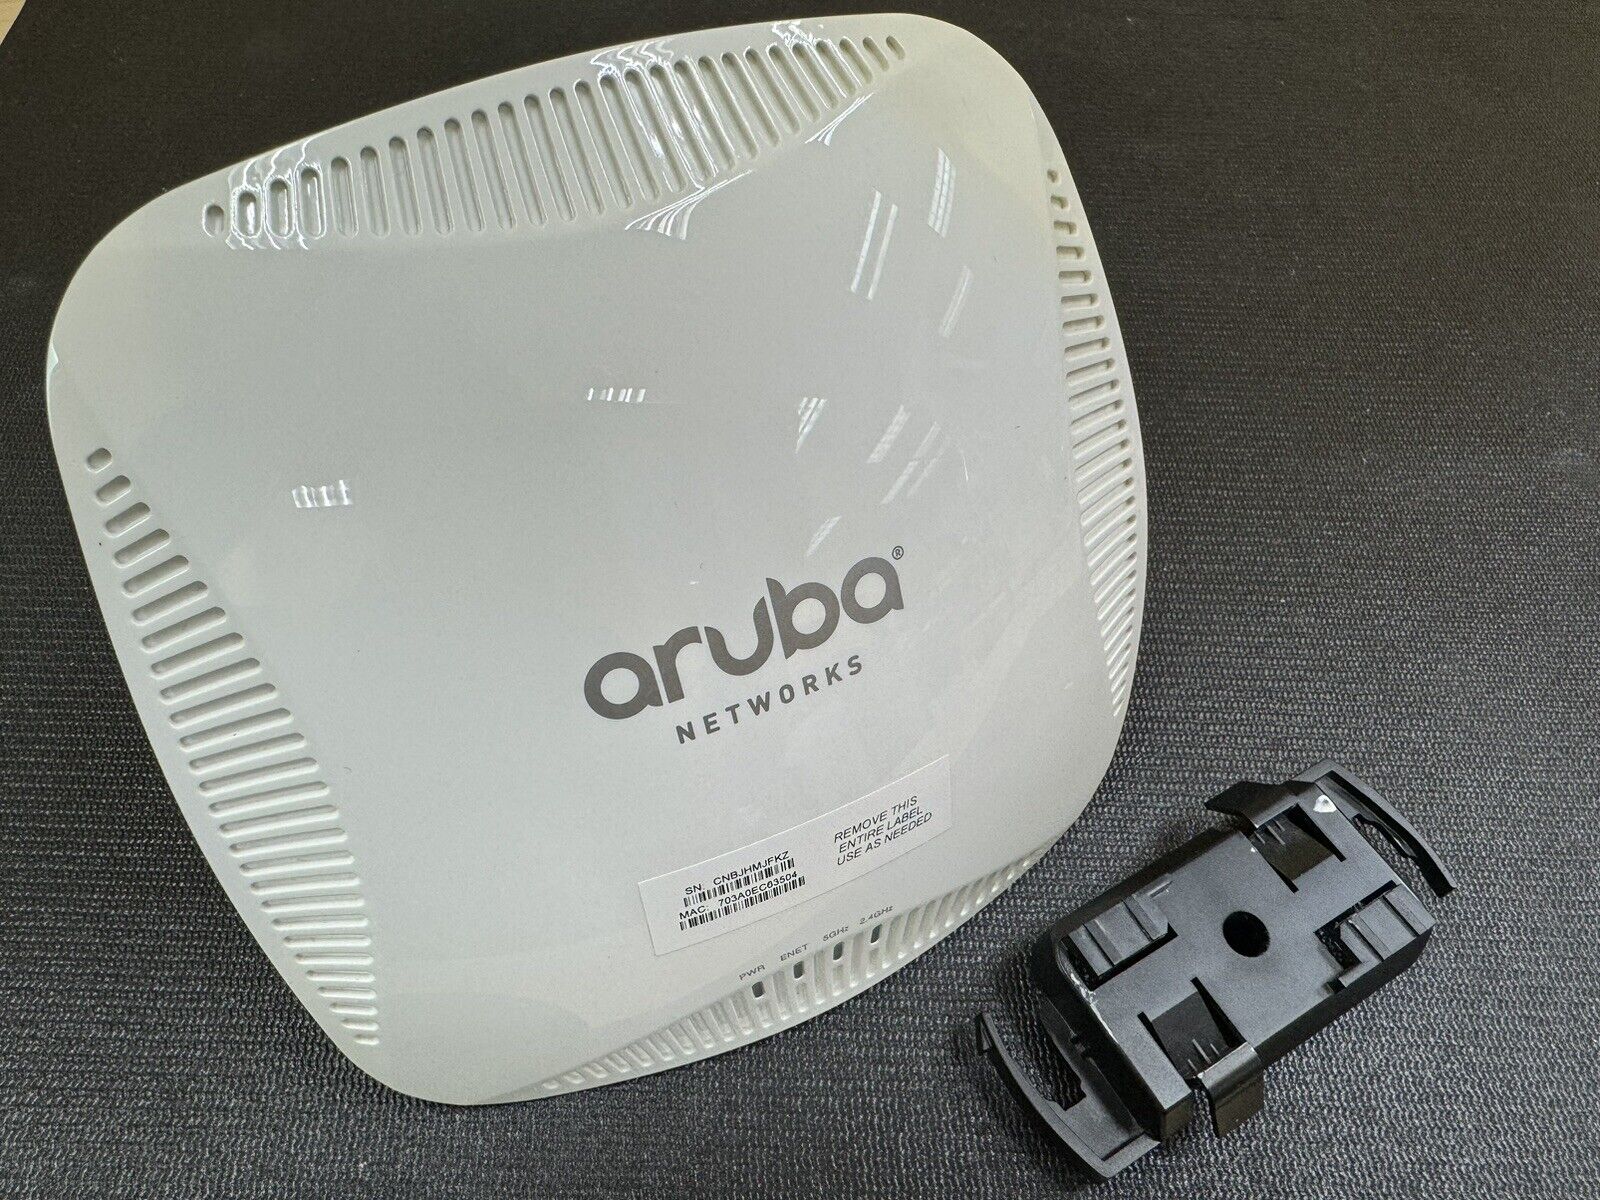 Aruba AP-205 802.11n/ac 2x2:2 Dual Radio Wireless Access Point - White With Clip